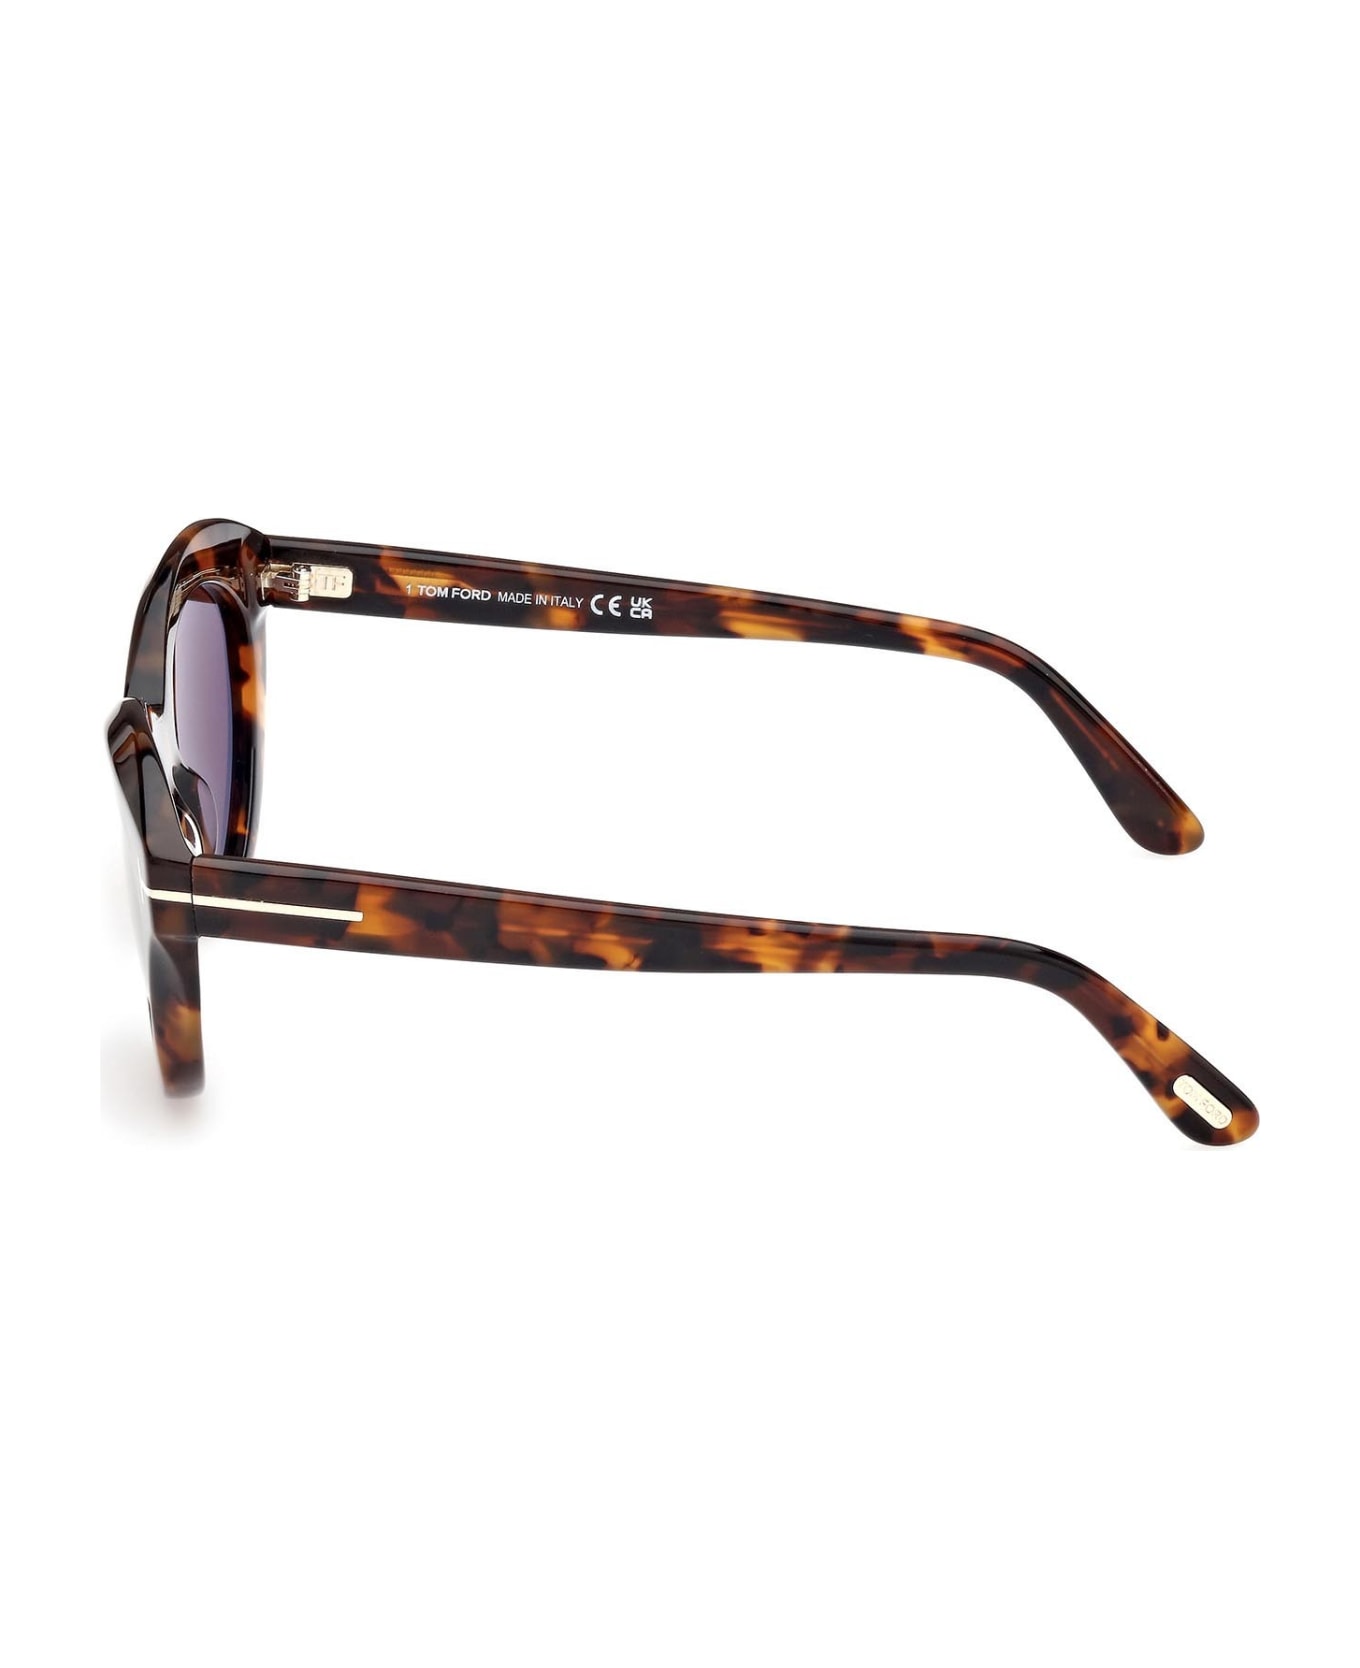 Tom Ford Eyewear Sunglasses - Havana/Marrone